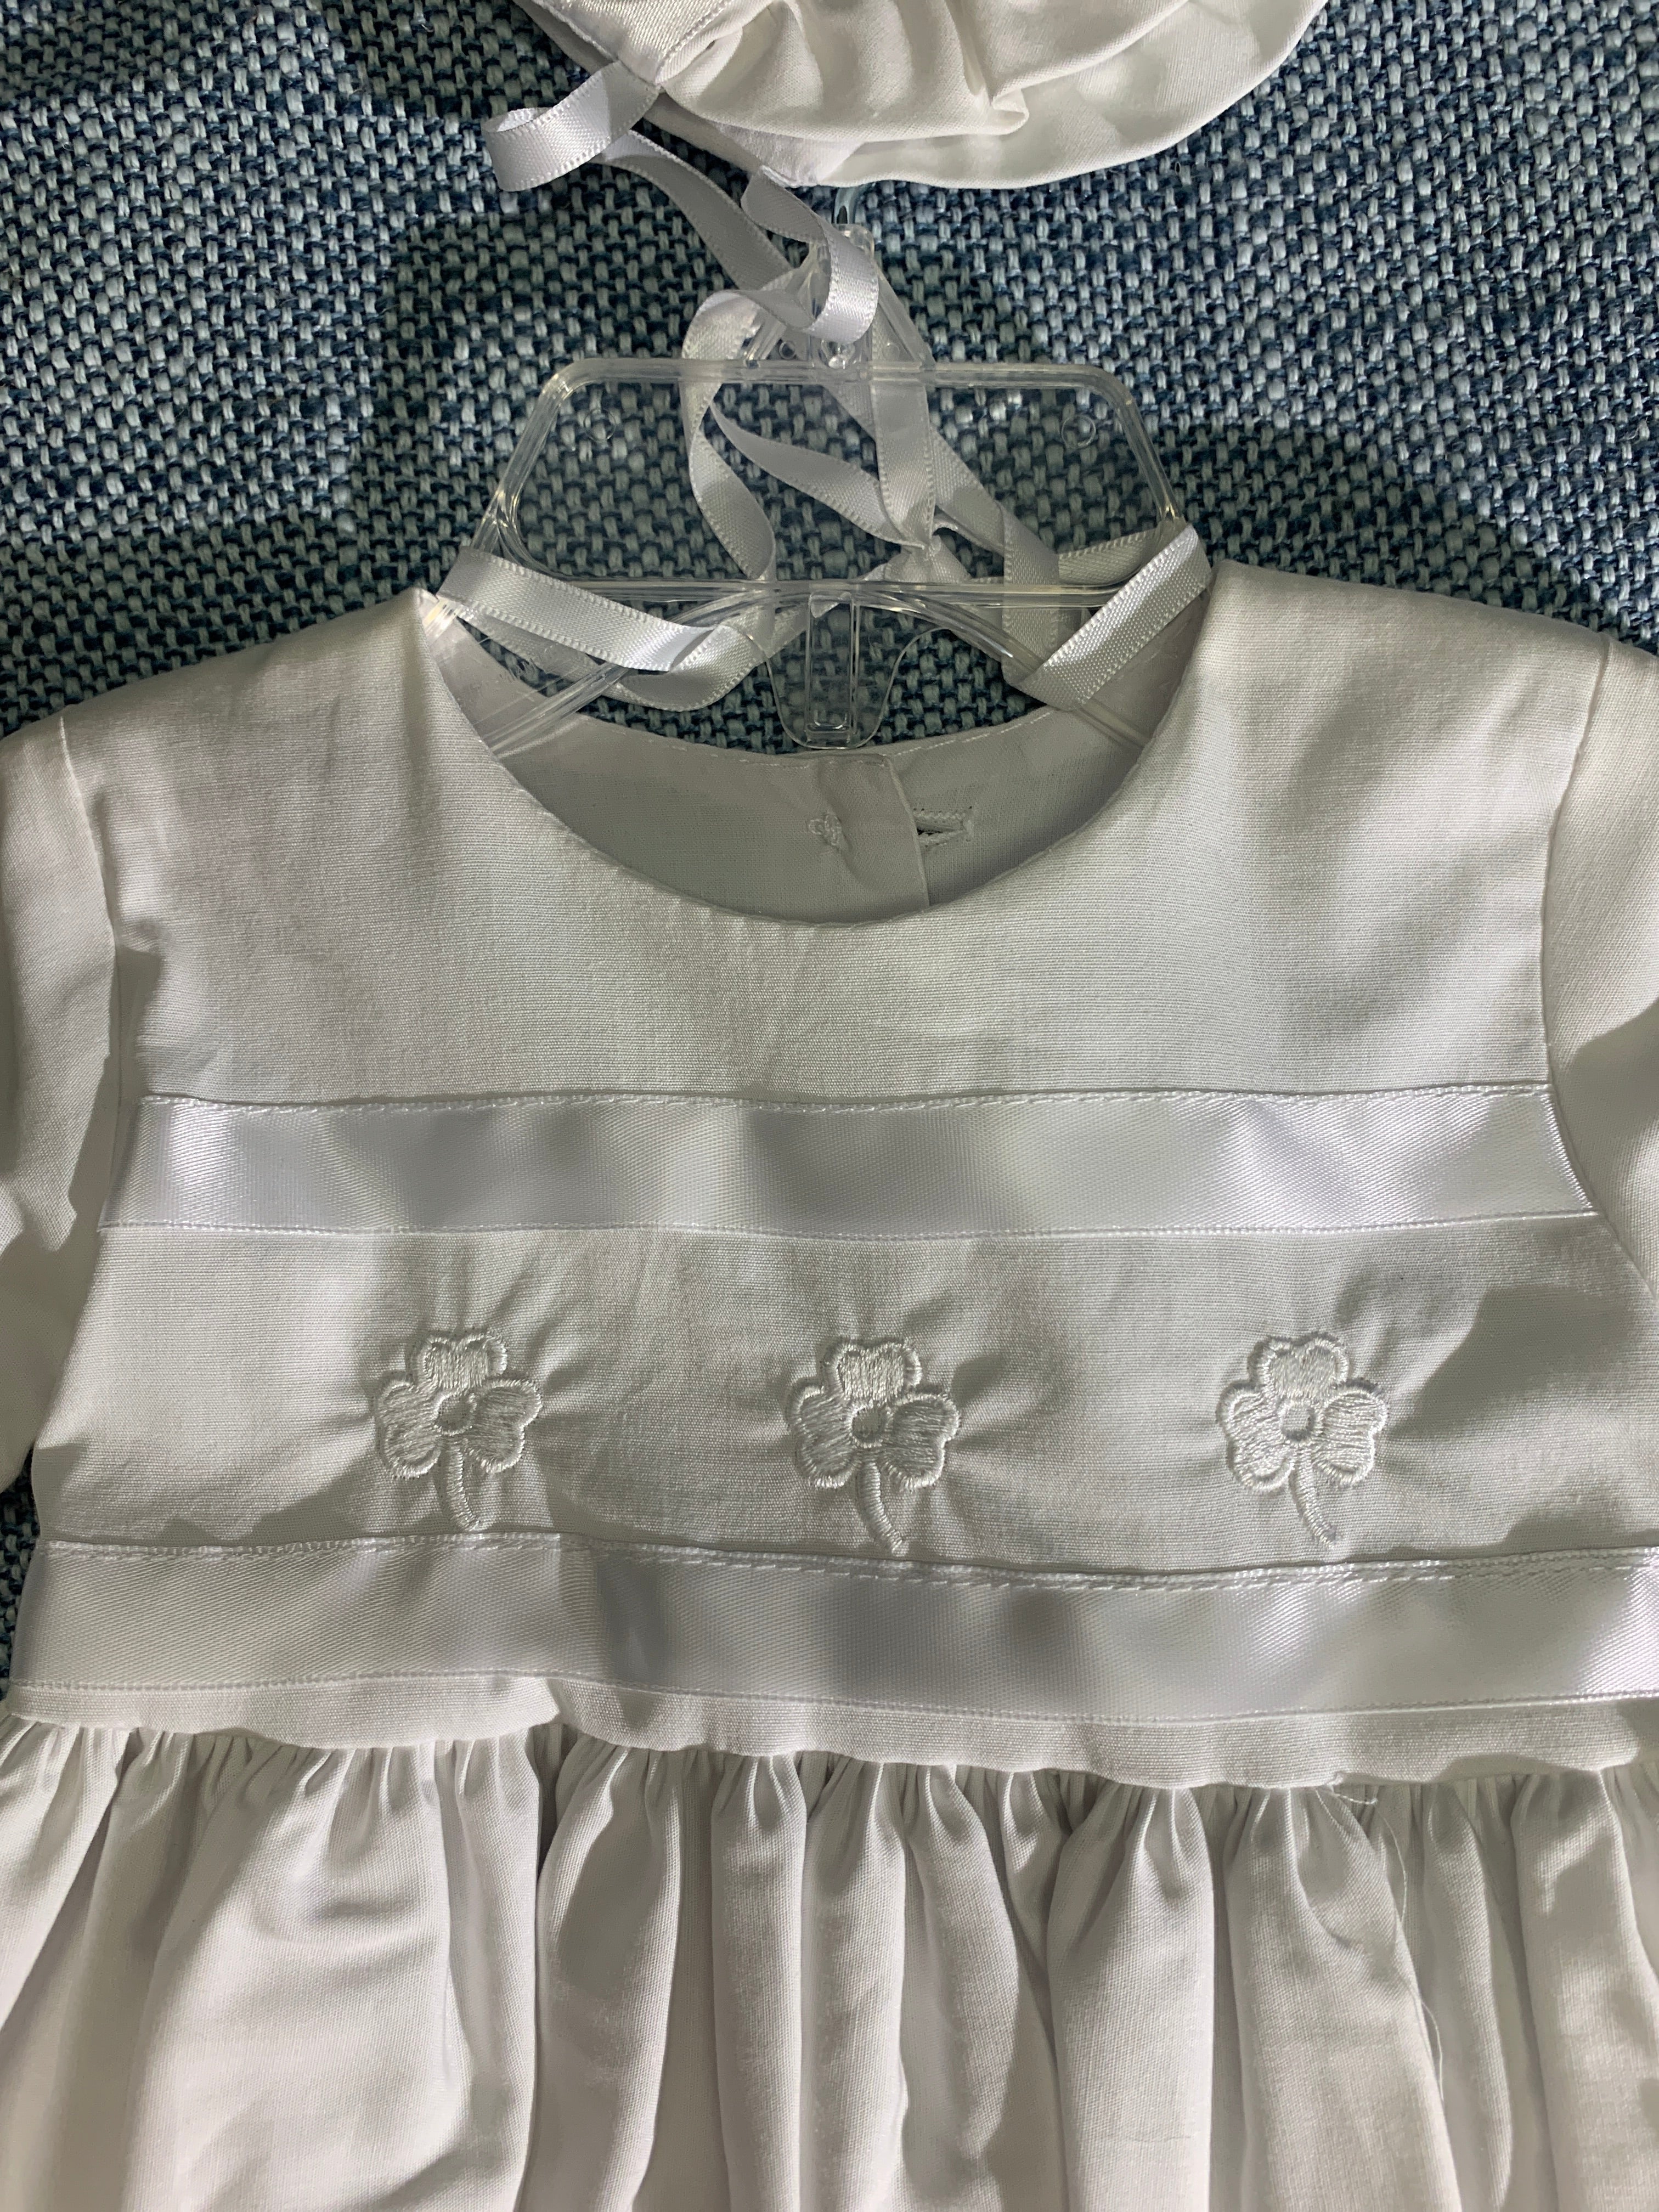 Family Unisex Gown “Bridget” with Shamrocks